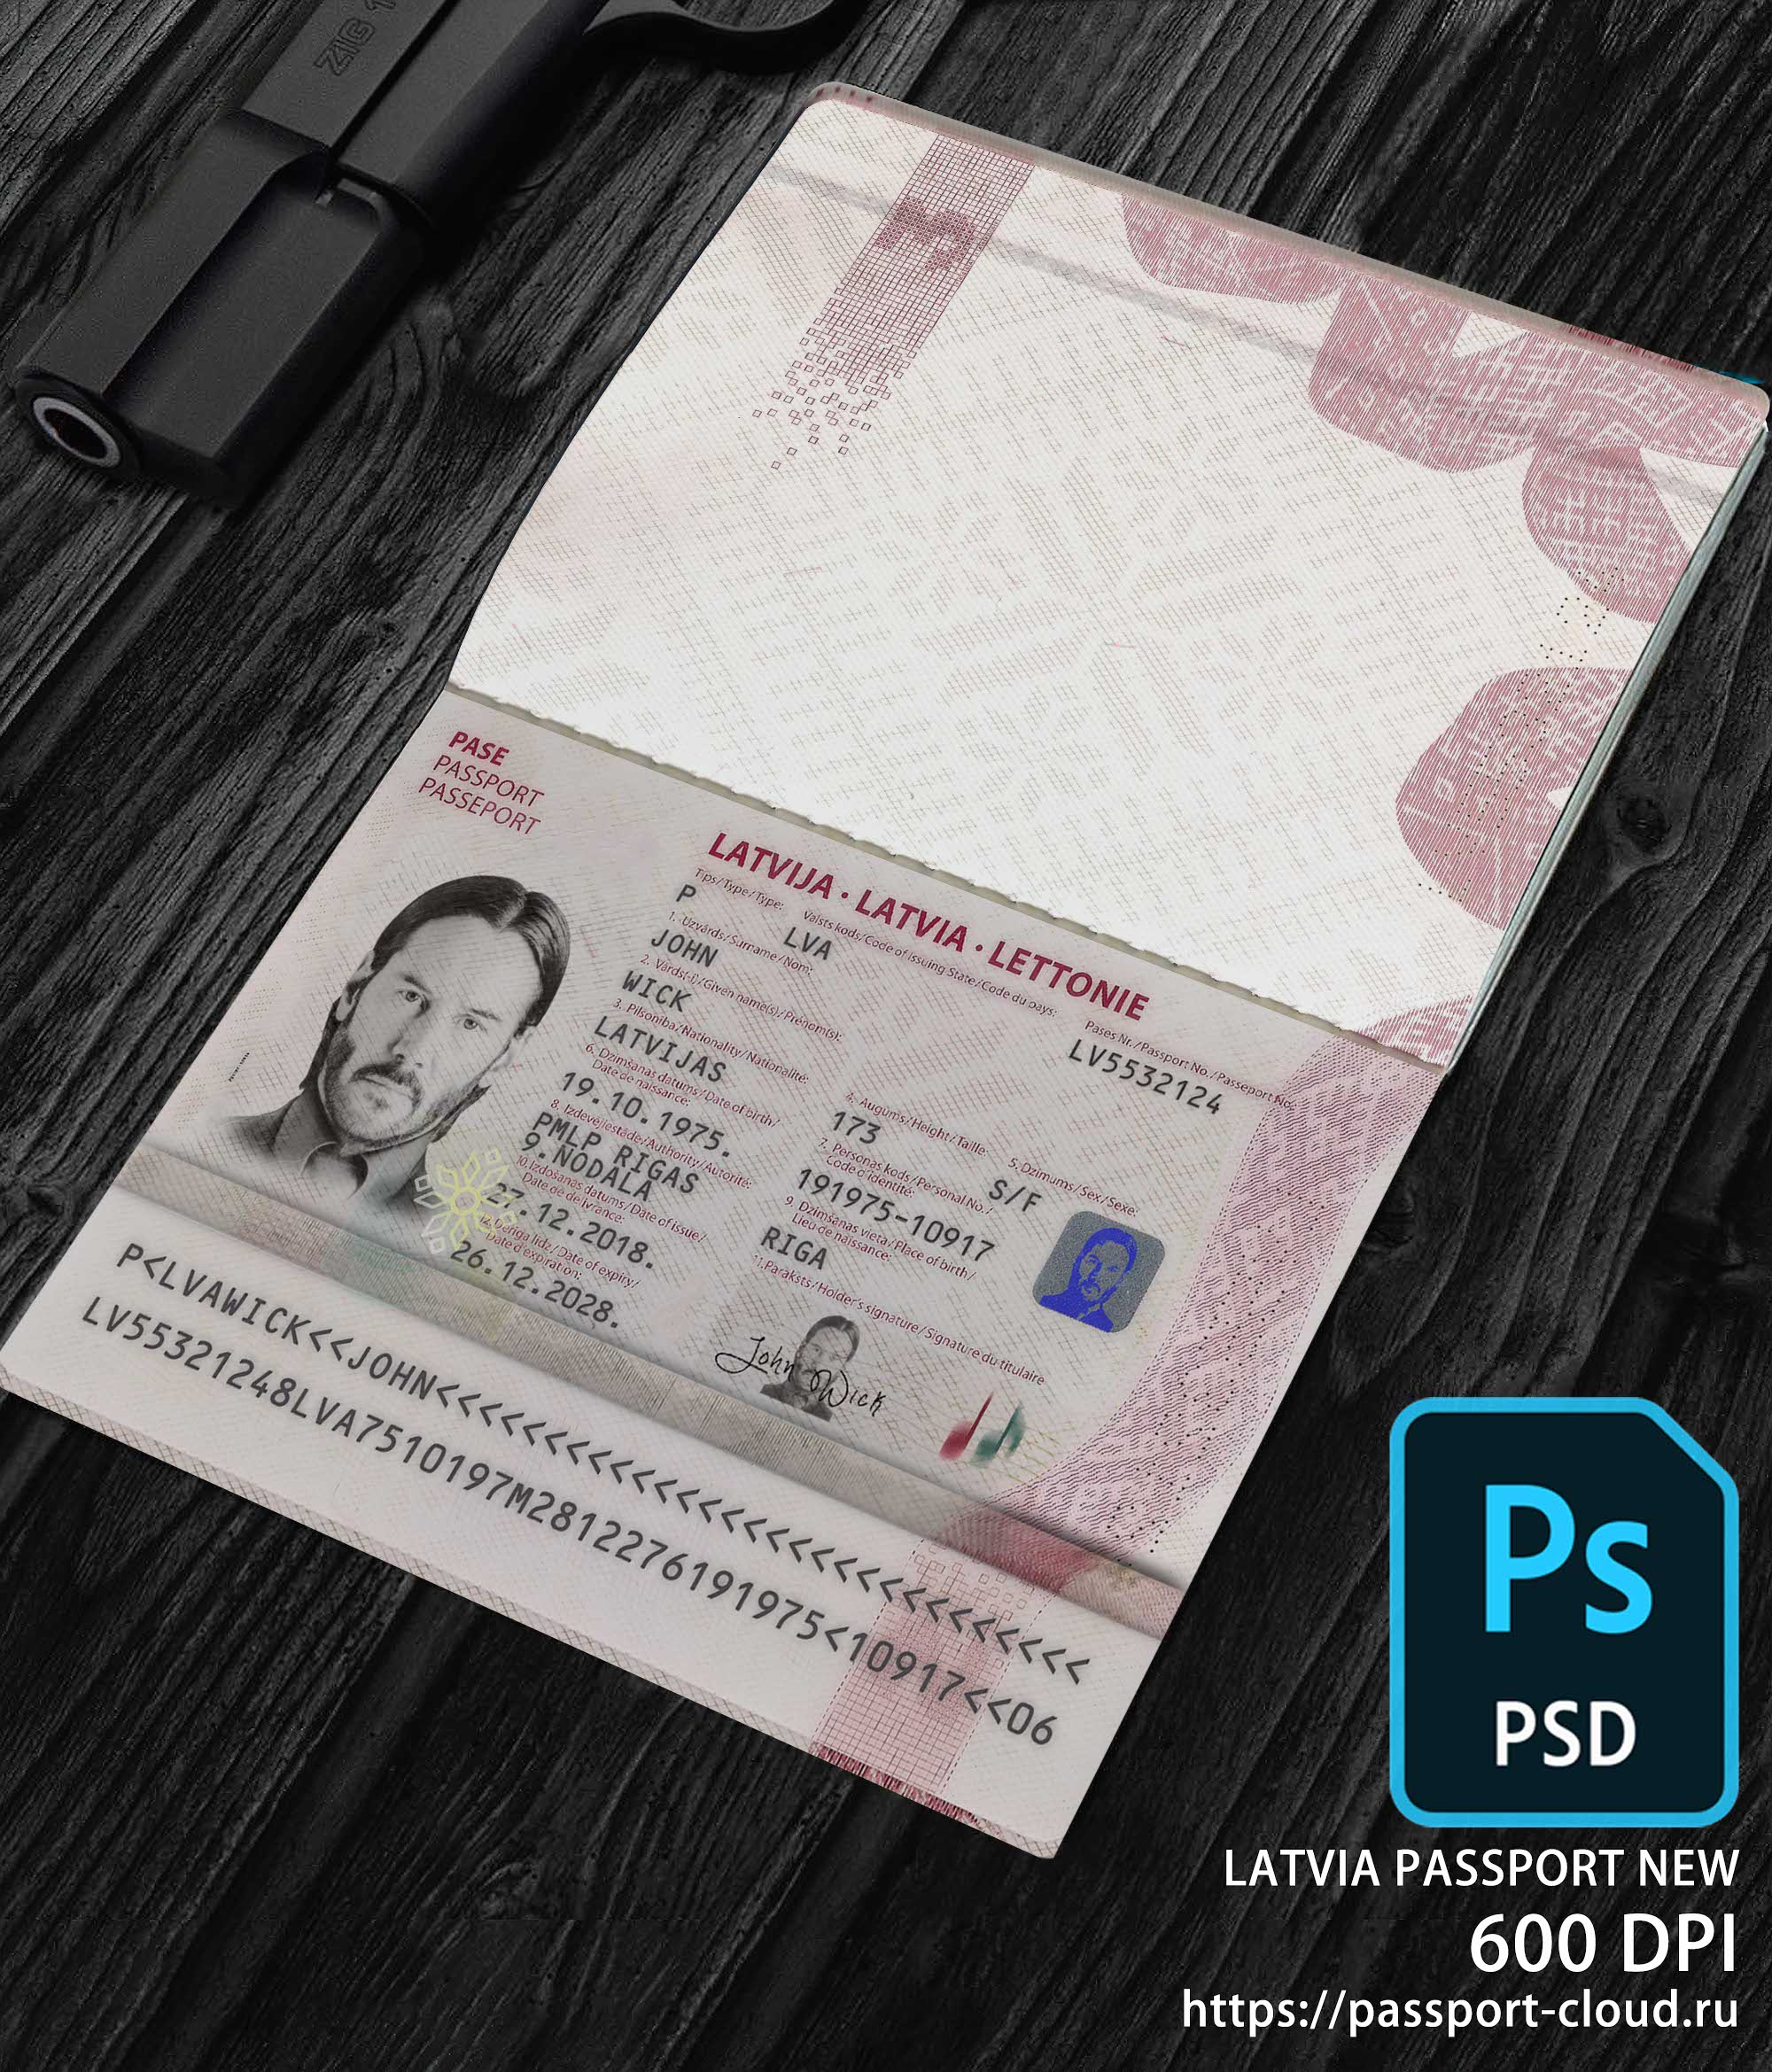 Latvia Passport-0